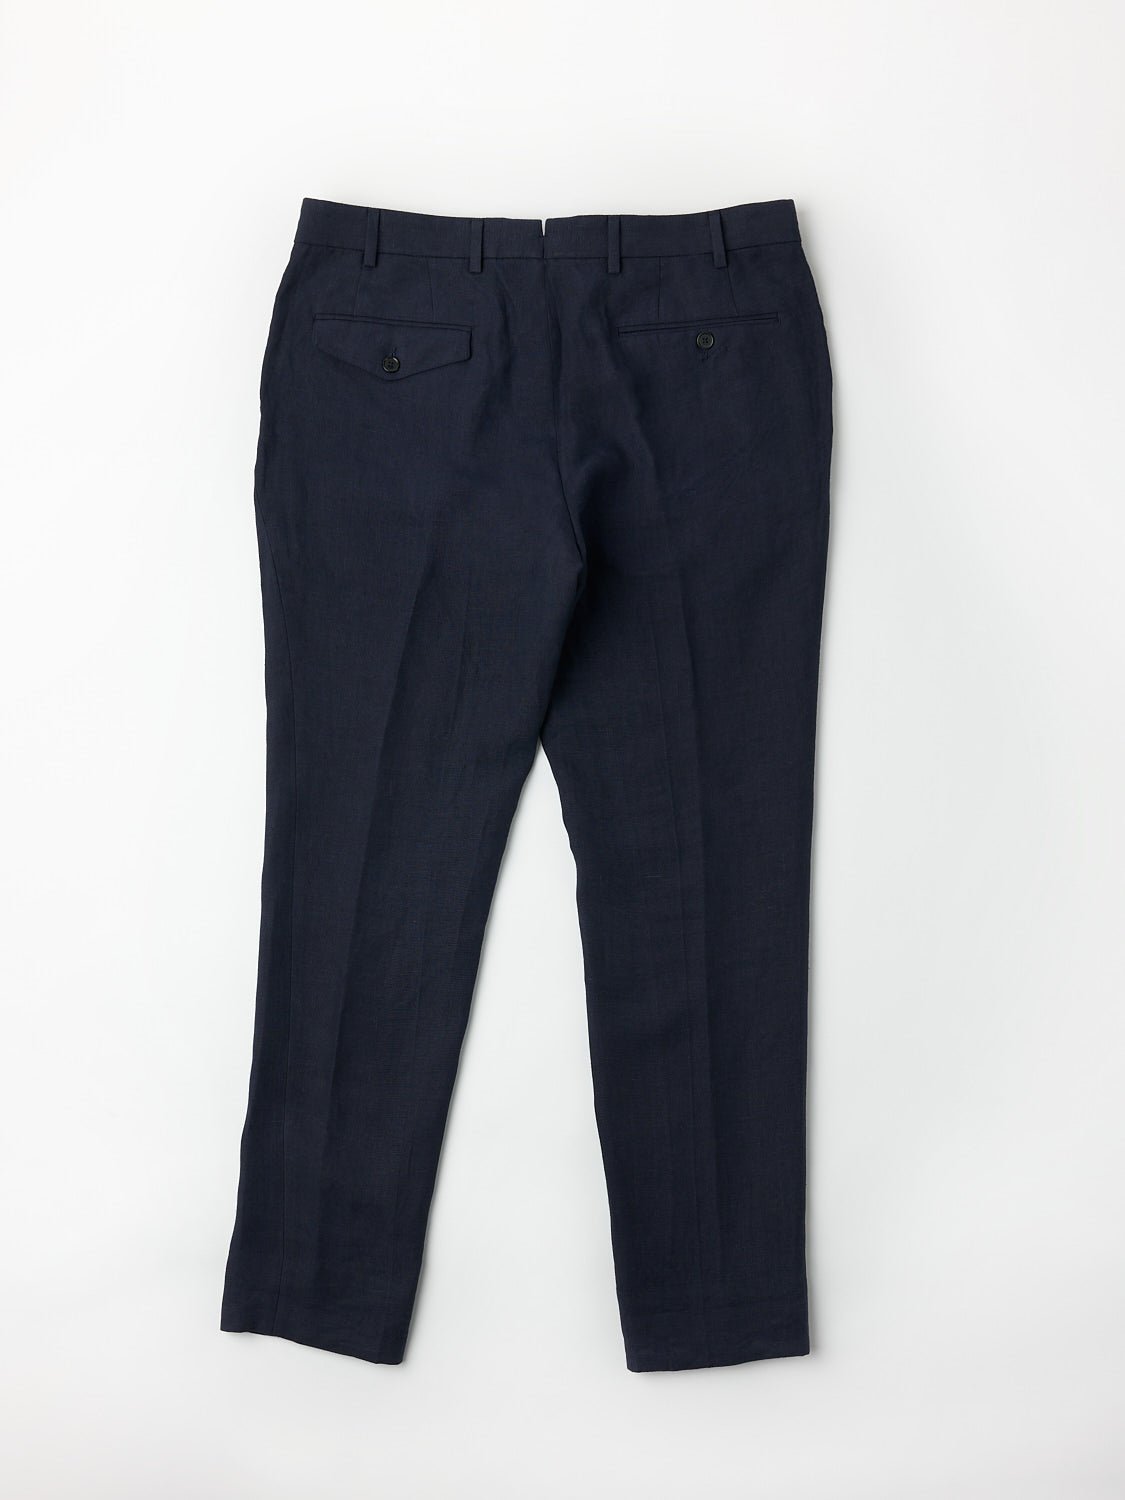 The Simple Folk Girls Organic Linen Trousers Size 3M9  Neiman Marcus